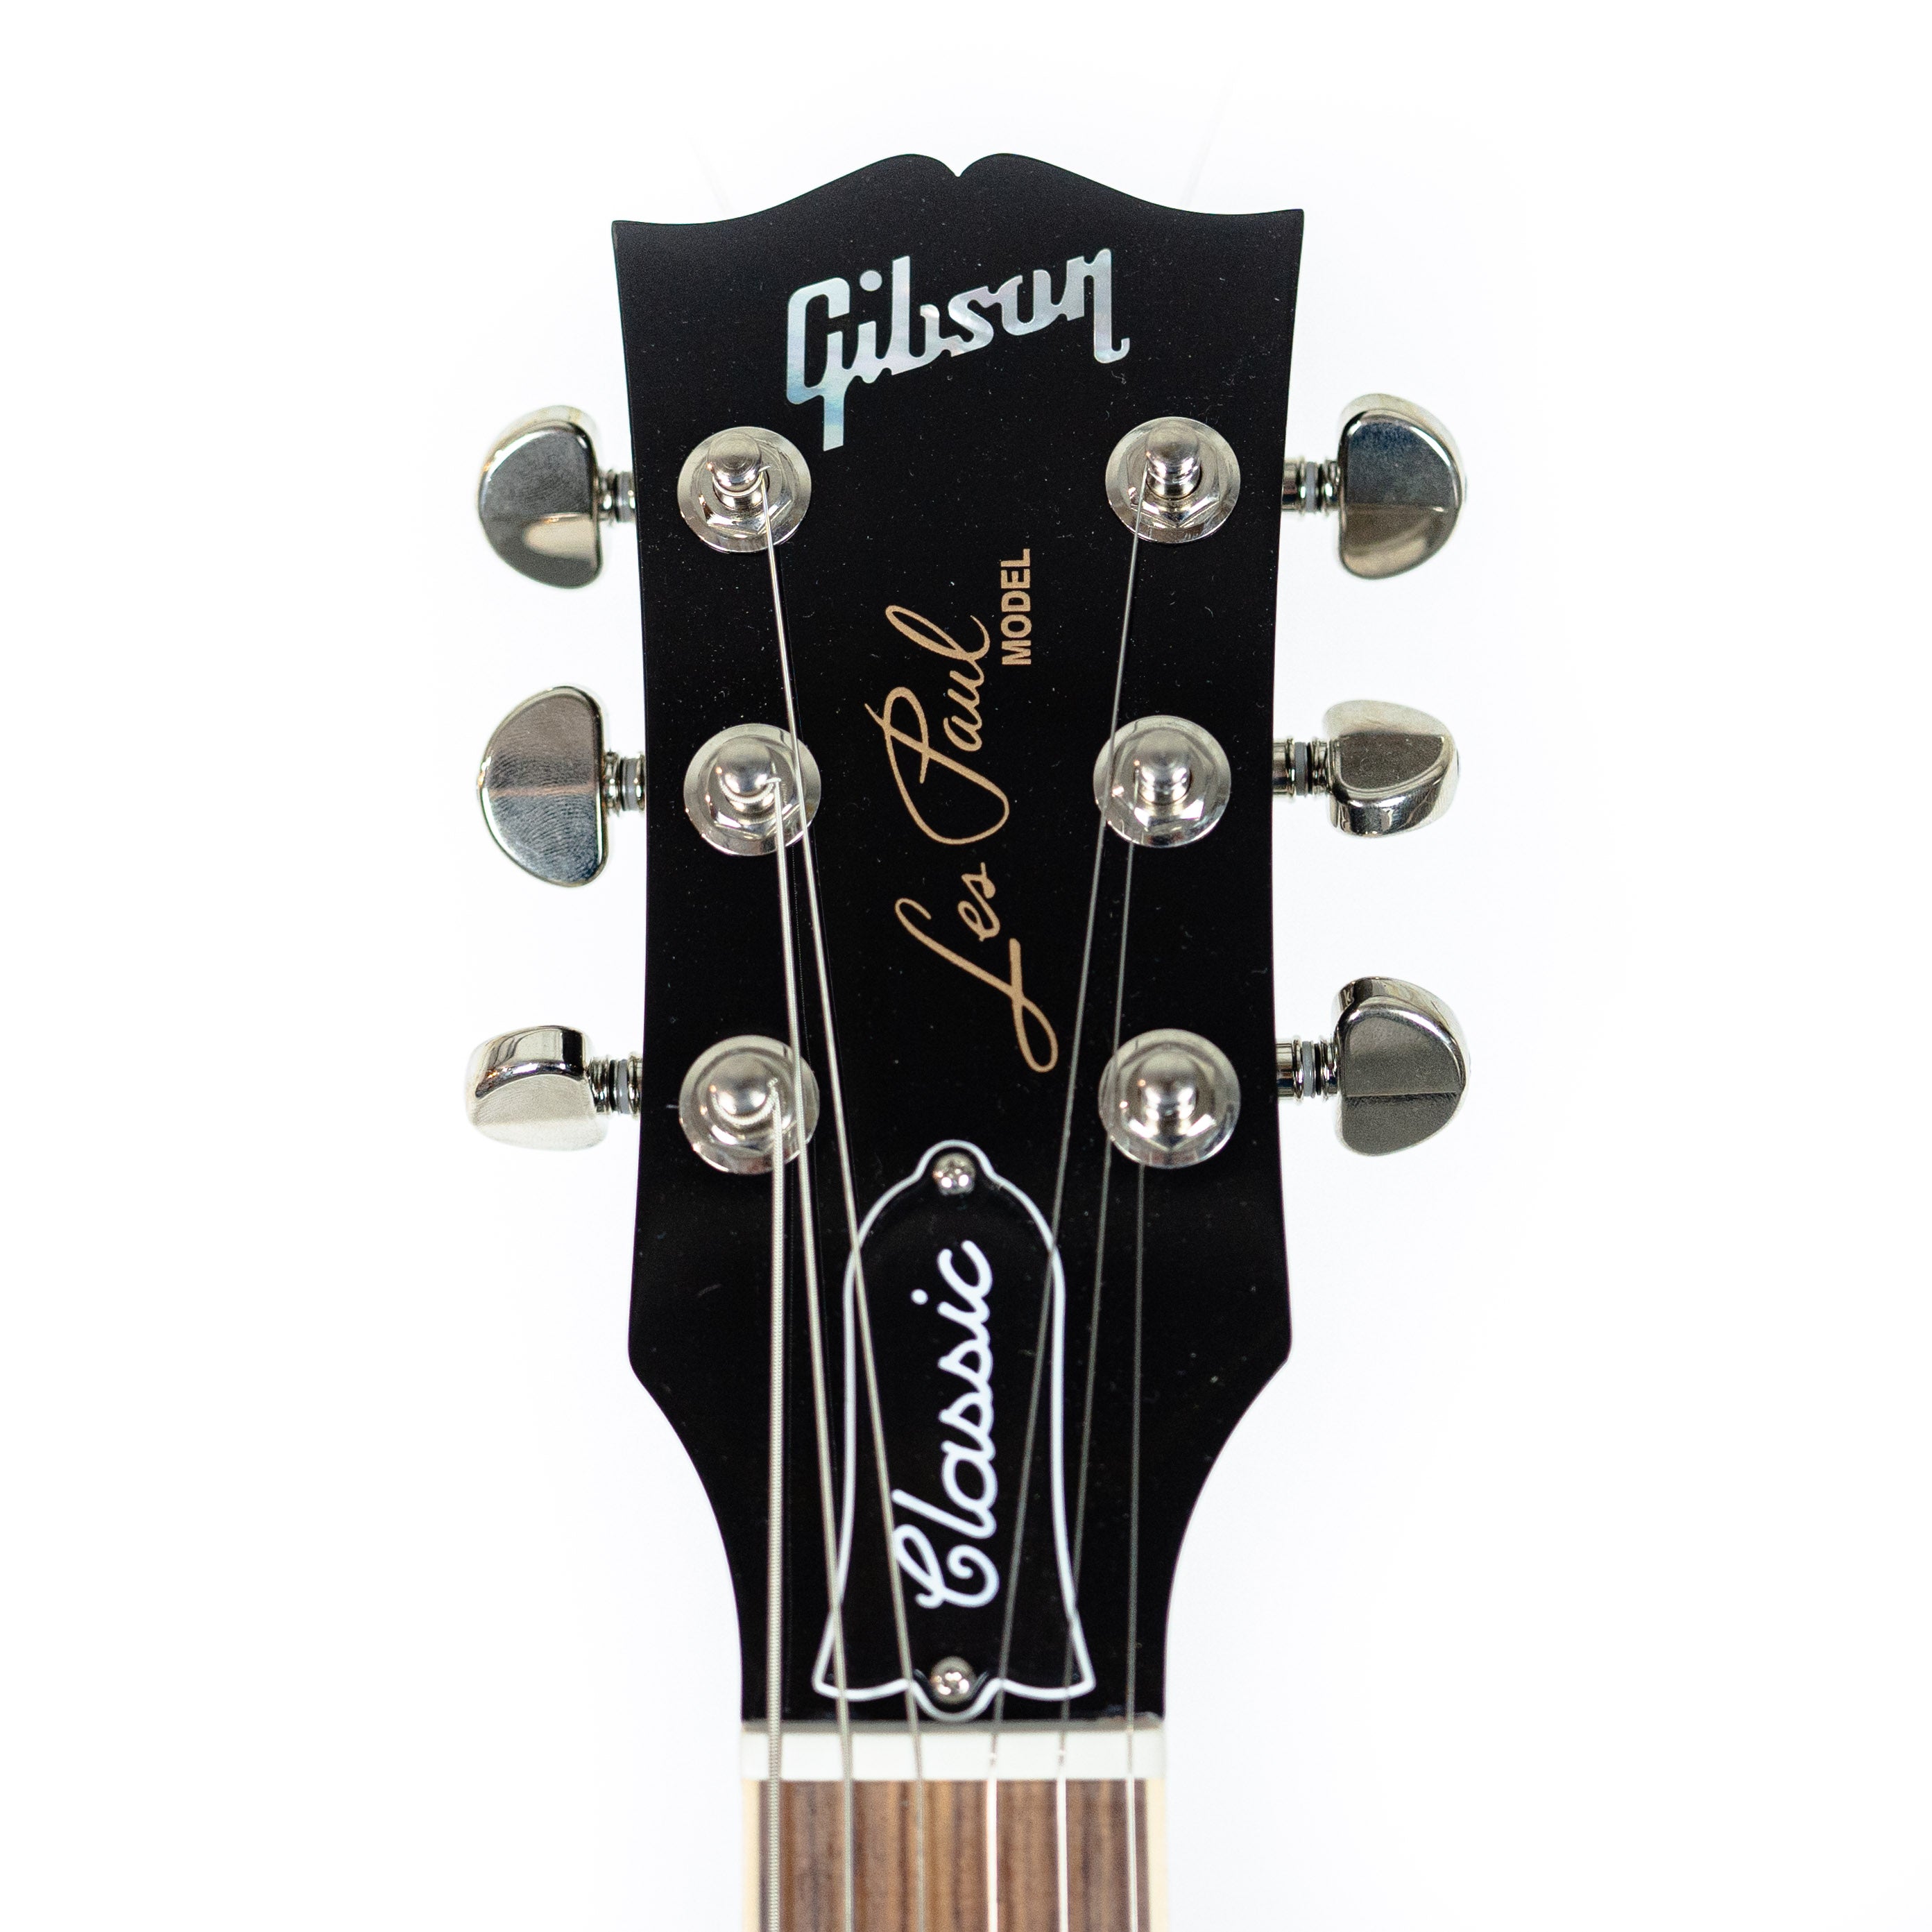 Gibson Les Paul Classic-Ebony